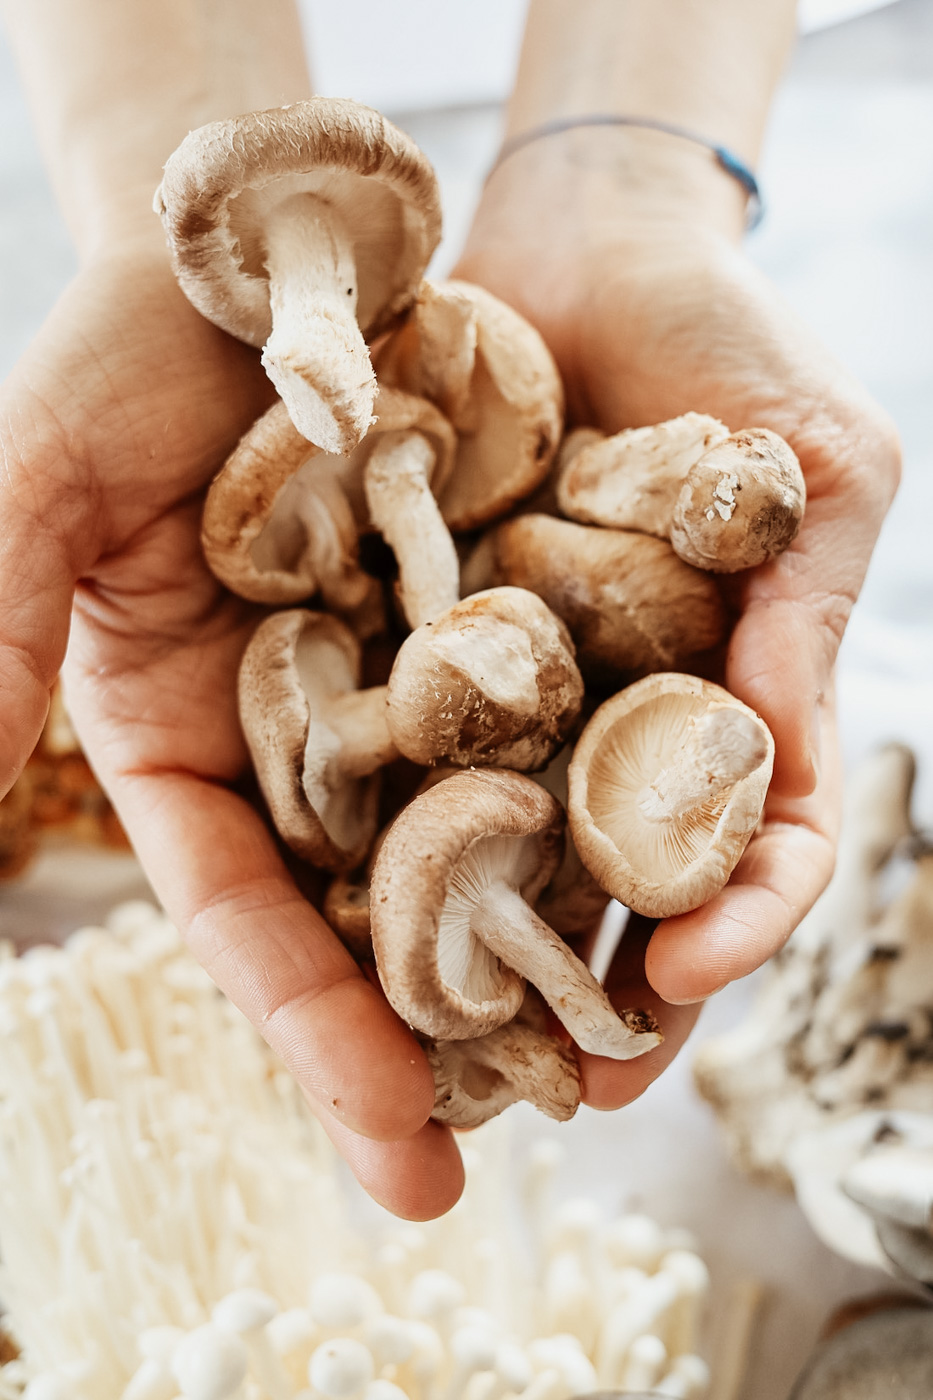 THE Mushroom Course by Herbal Academy - mushroom forage